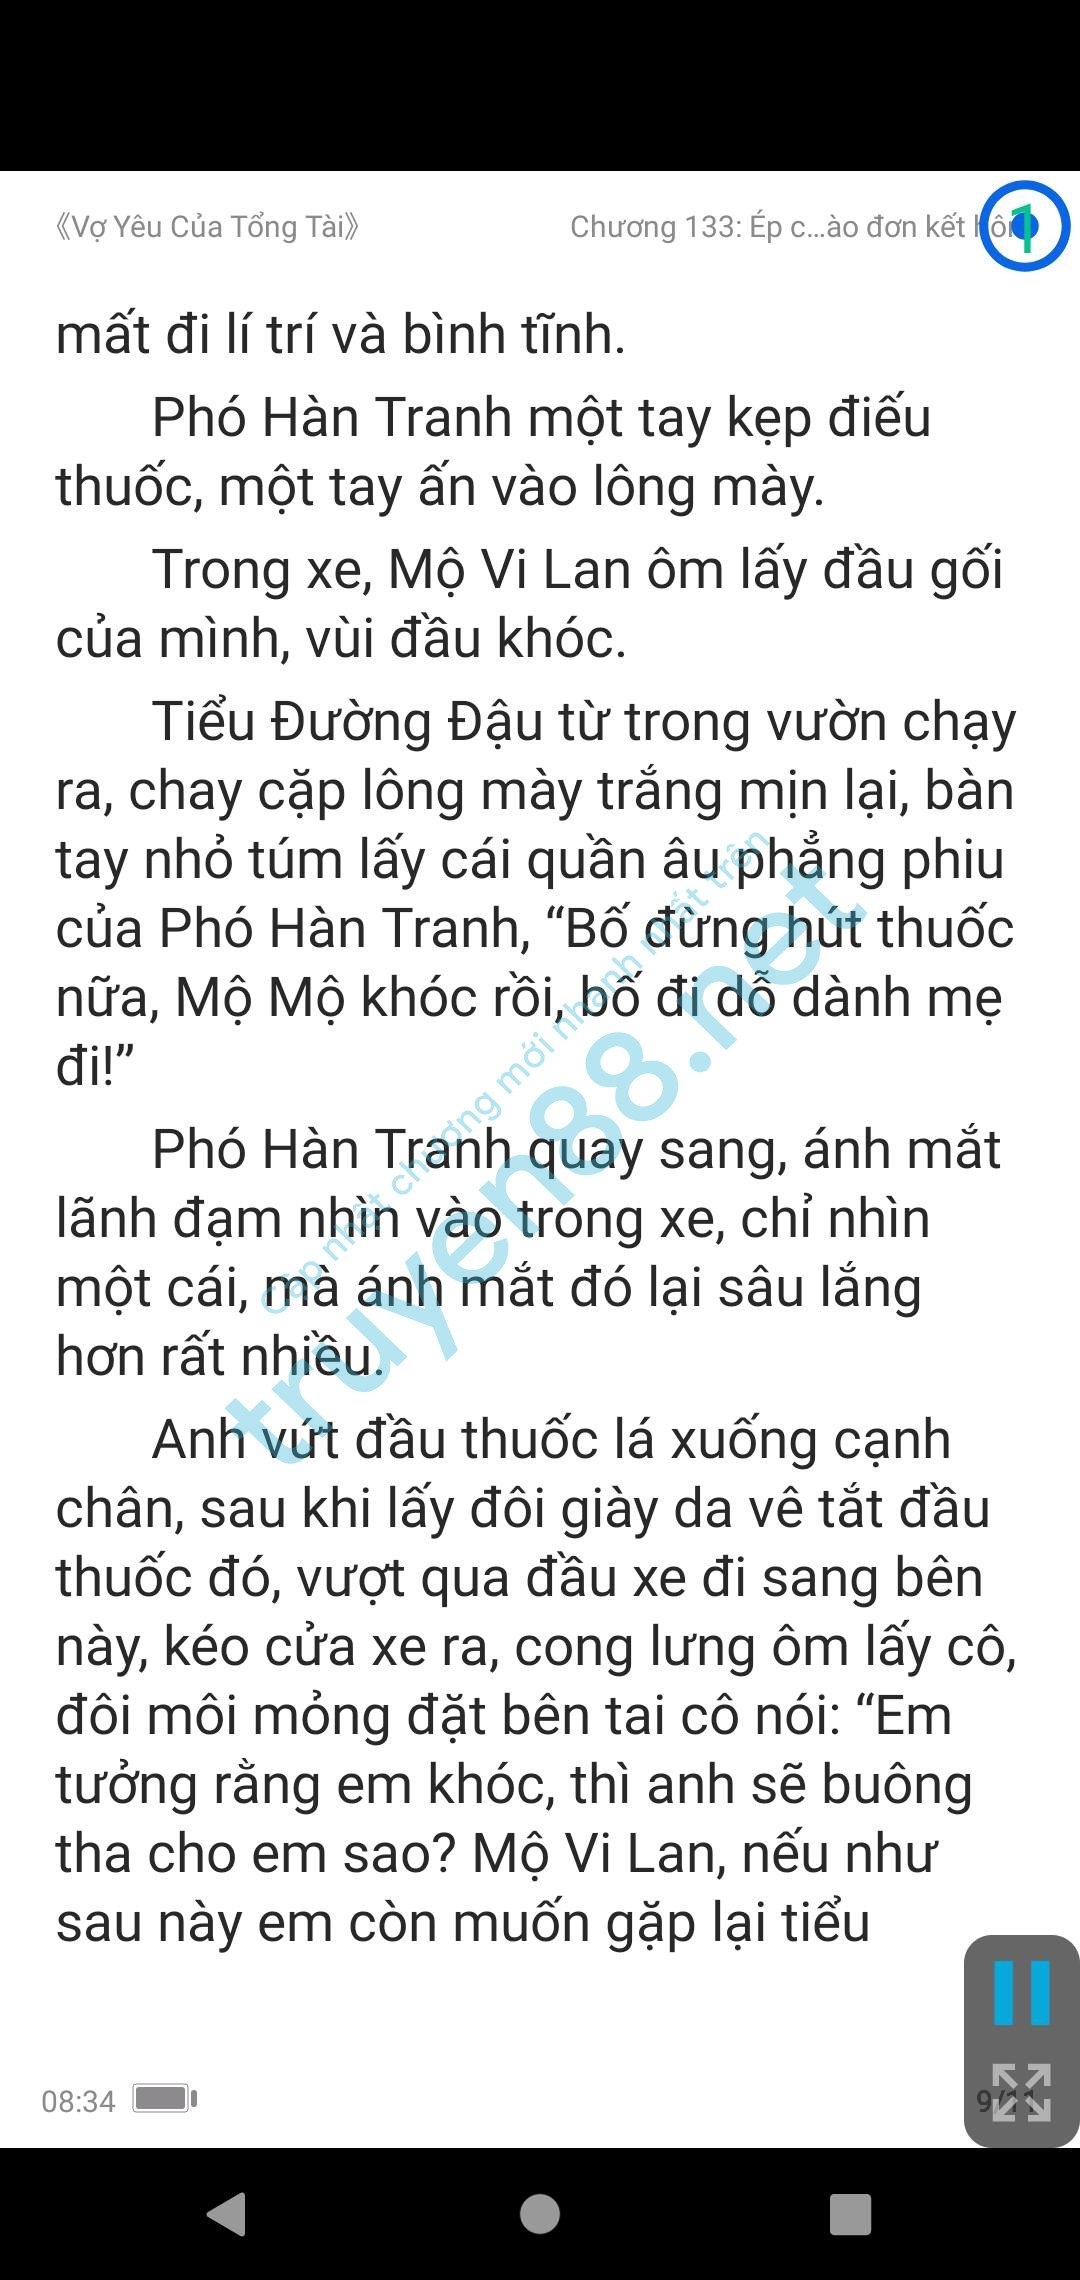 vo-yeu-cua-tong-tai-mo-vi-lan--pho-han-tranh-133-1